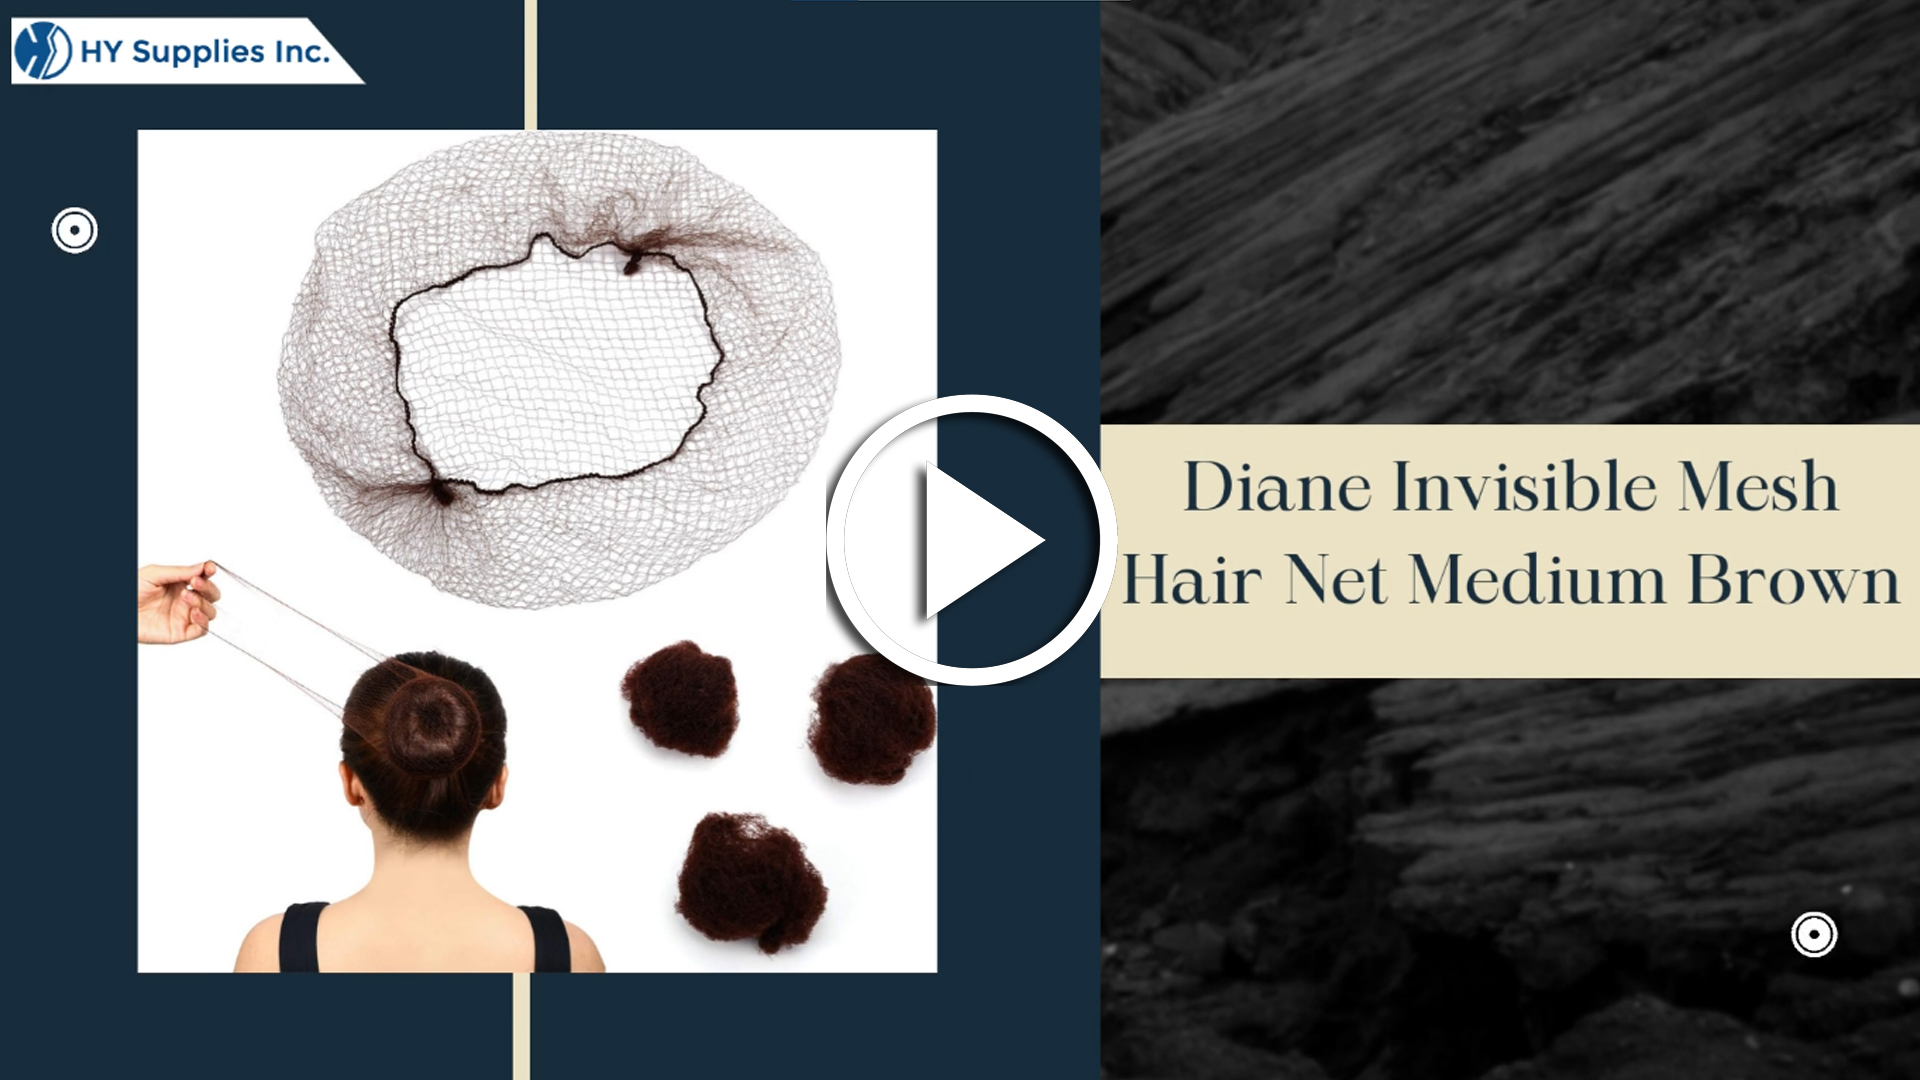 Diane Invisible Mesh Hair Net Medium Brown